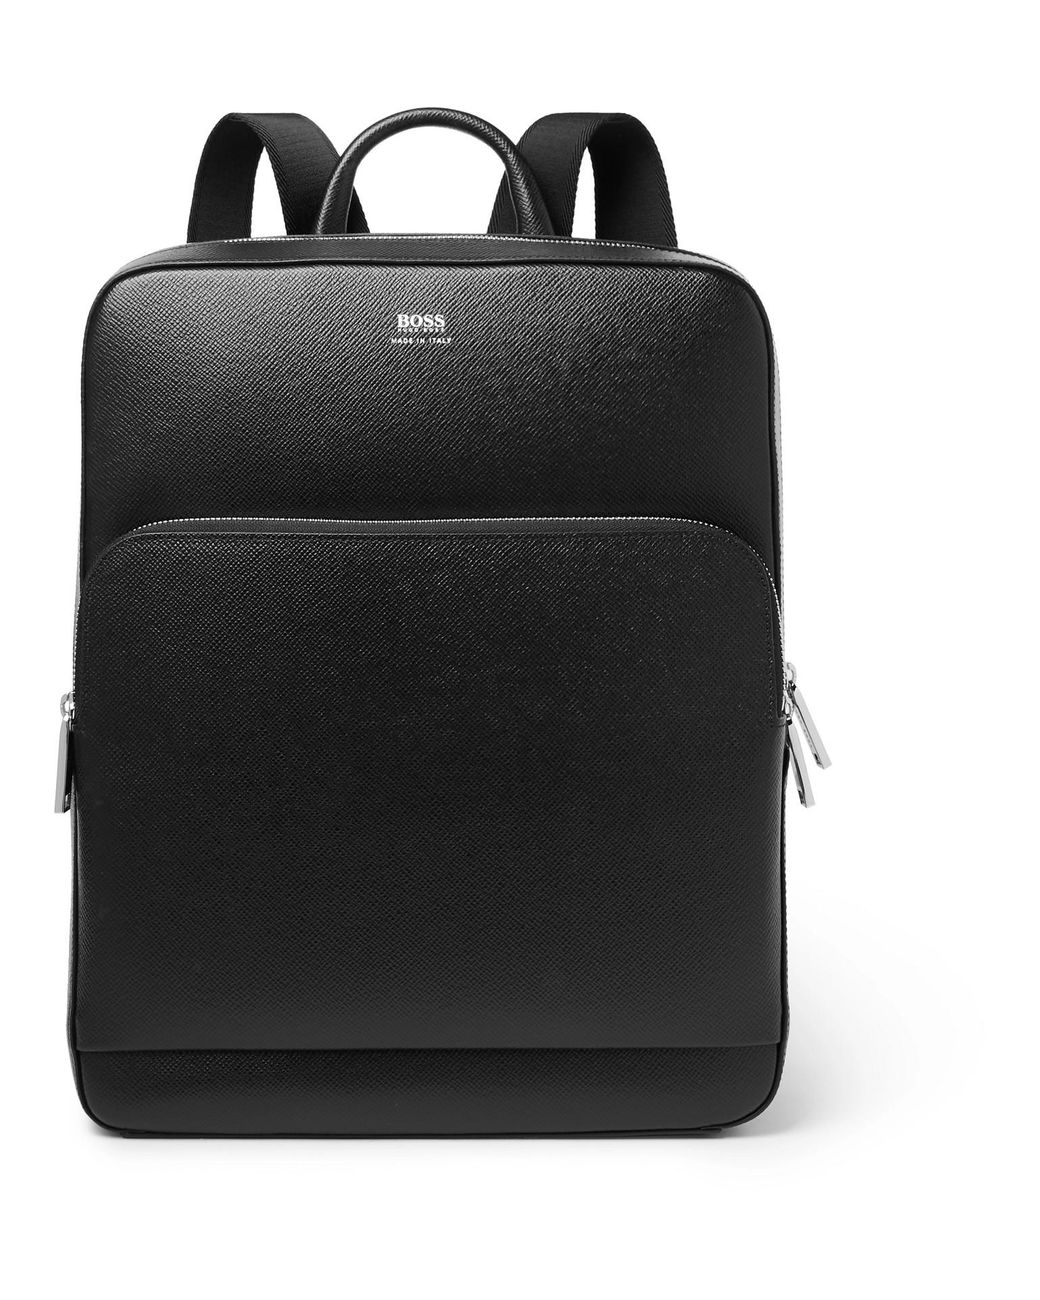 BOSS by HUGO BOSS Signature Full-grain Leather Backpack in Black for ...